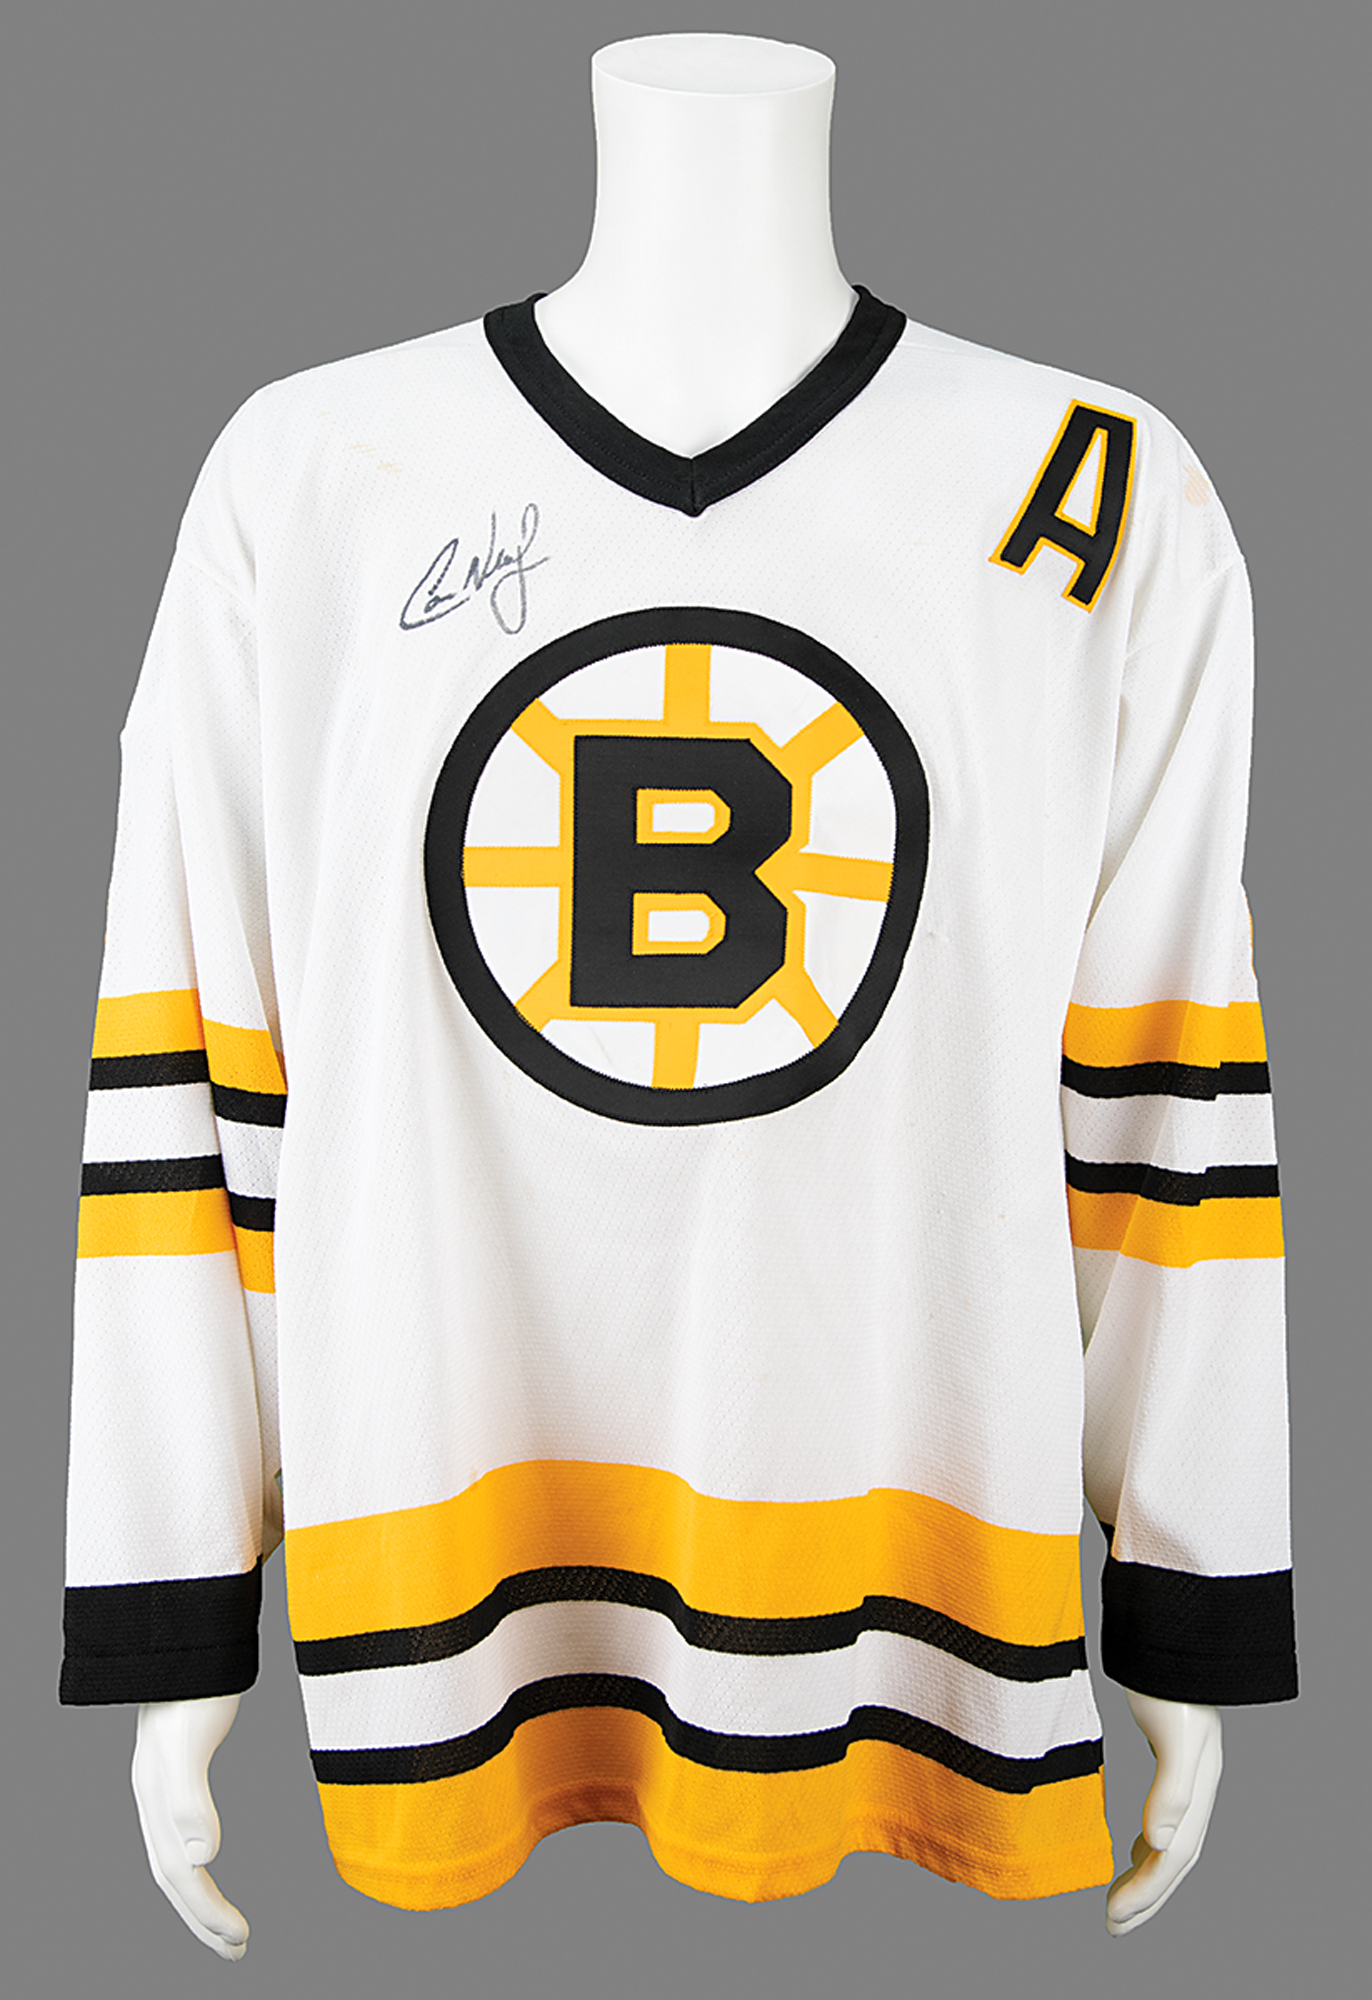 Boston Bruins Legends (16 x 20)